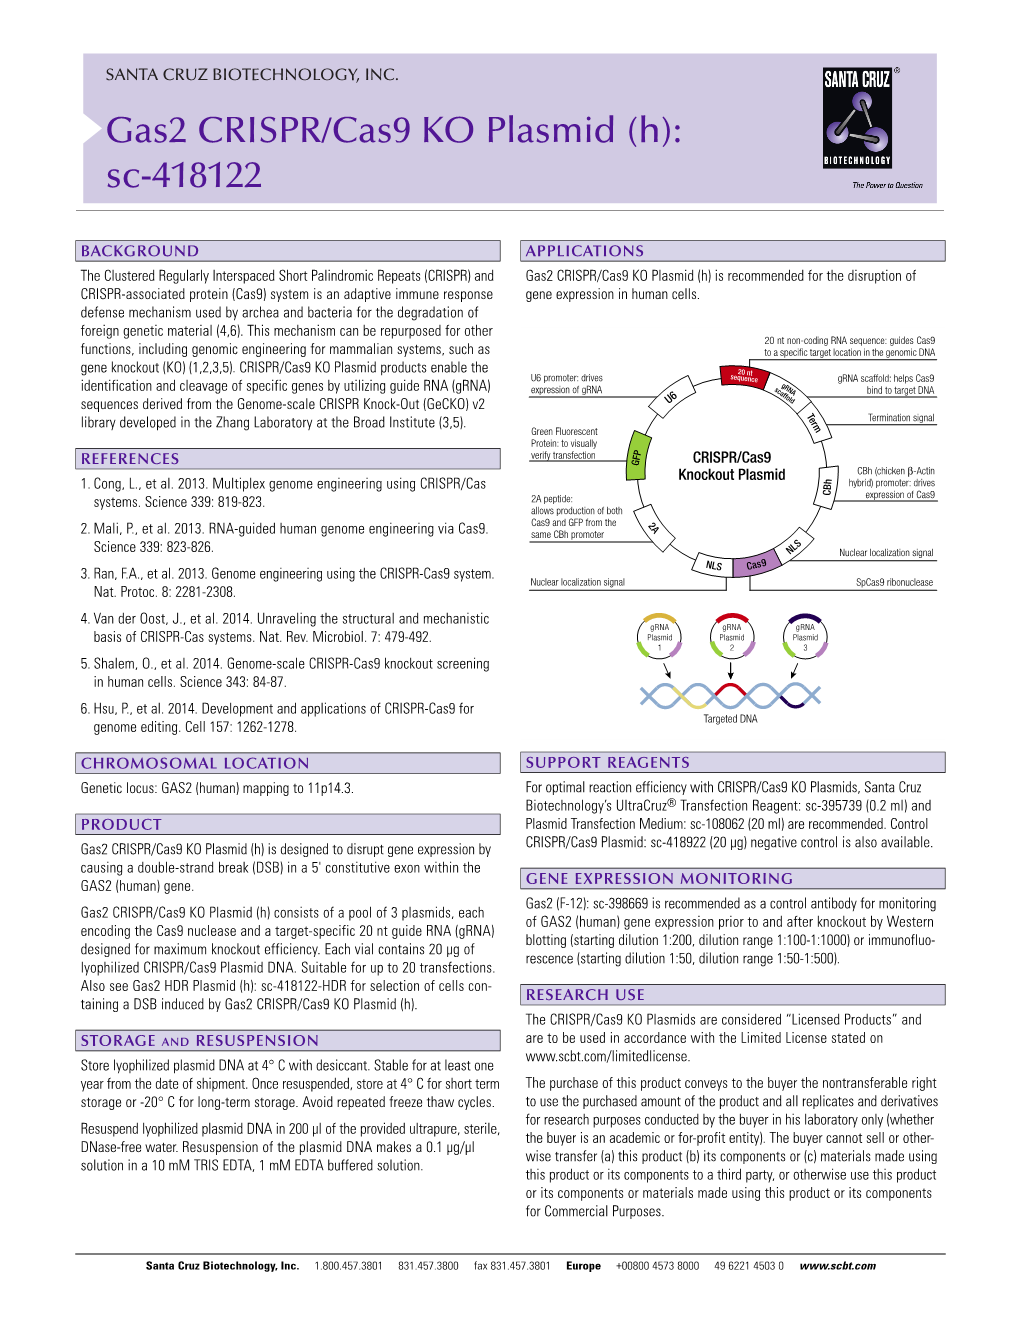 Gas2 CRISPR/Cas9 KO Plasmid (H): Sc-418122